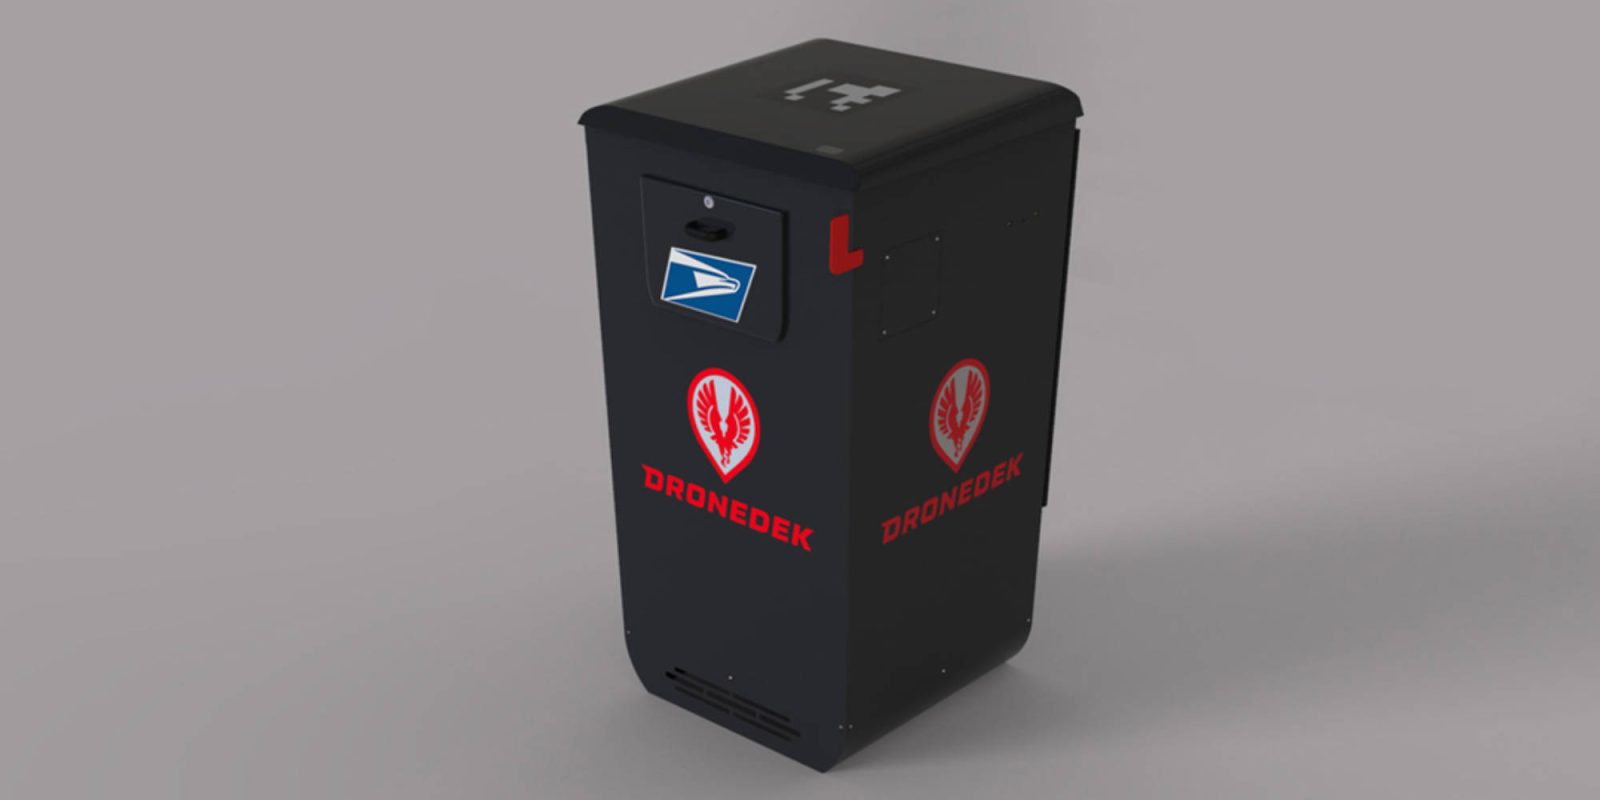 DRONEDEK drone-friendly mailbox